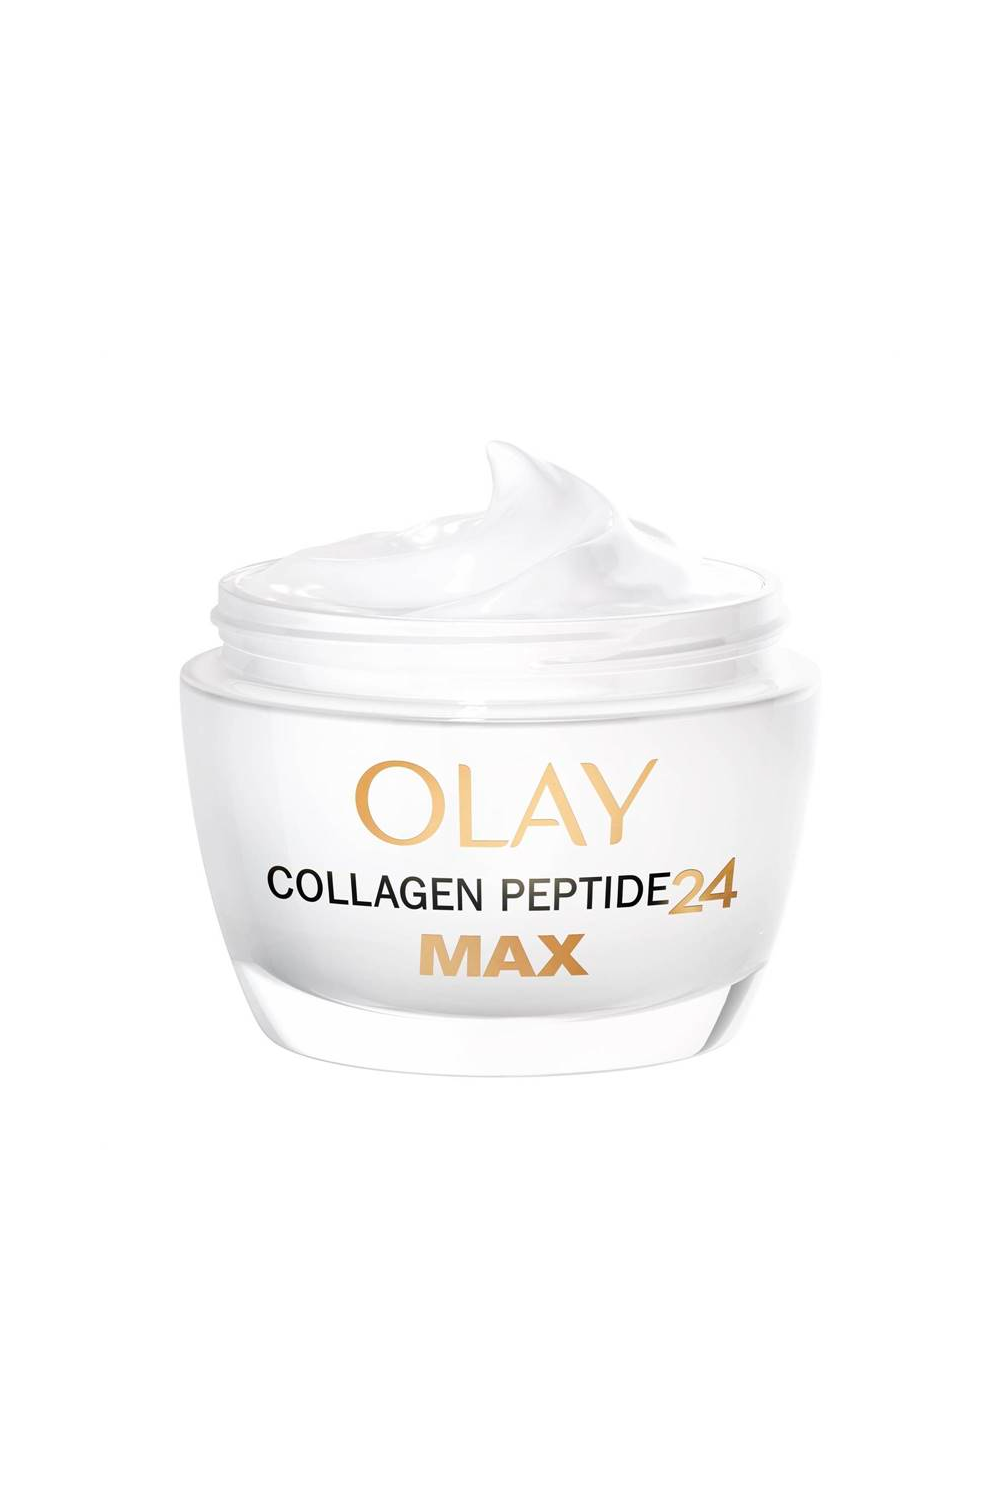 Olay: Crema Collagen Peptide24 Max